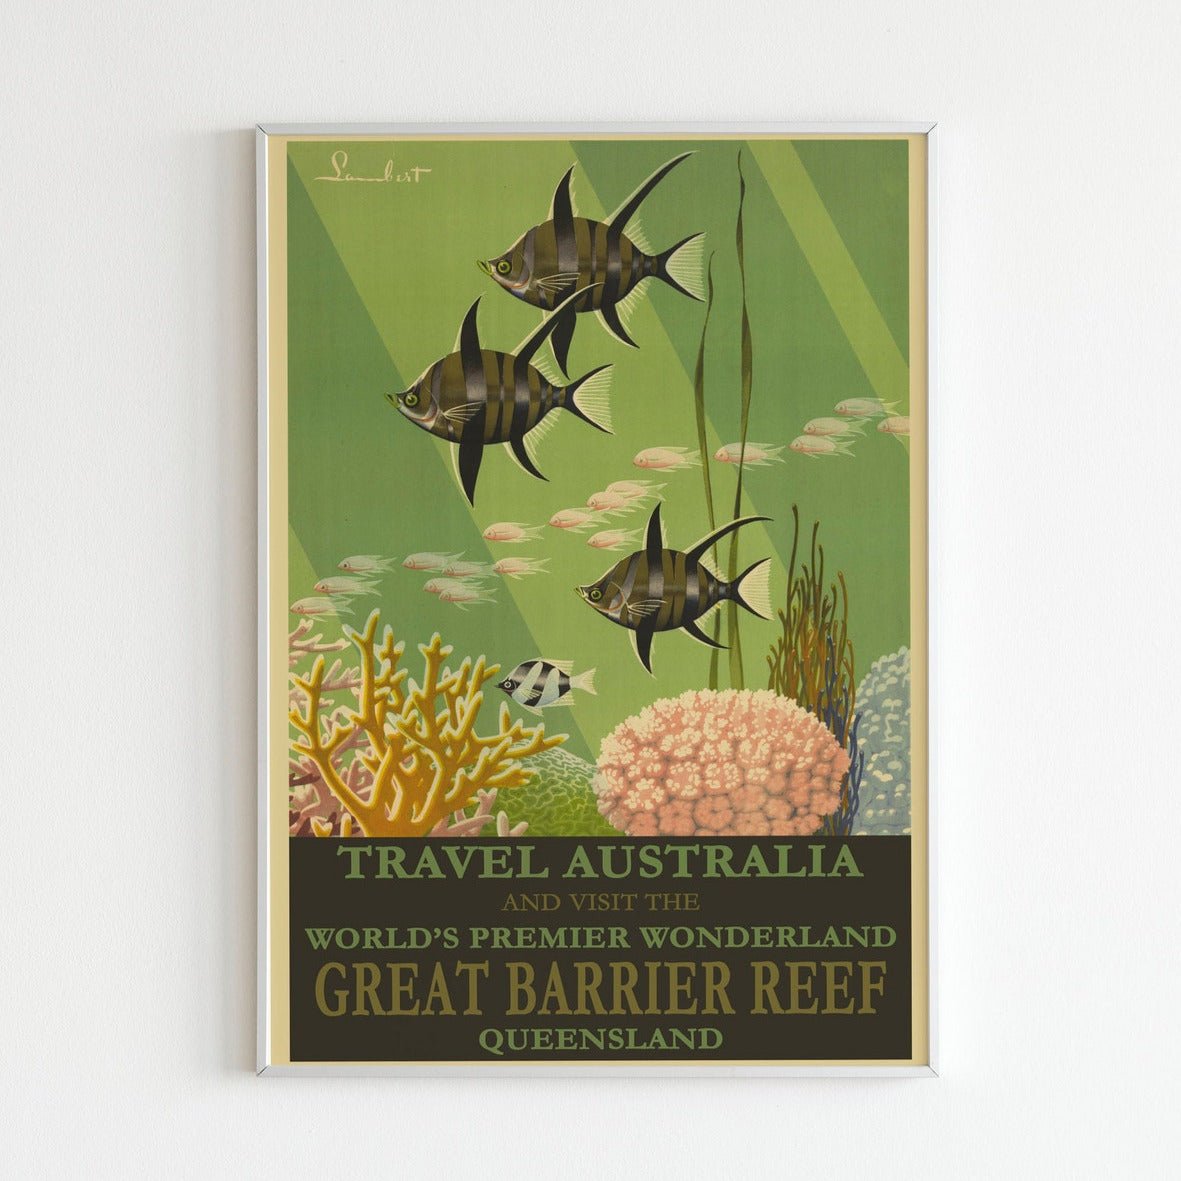 Great Barrier Reef - Vintage Australia Travel Poster